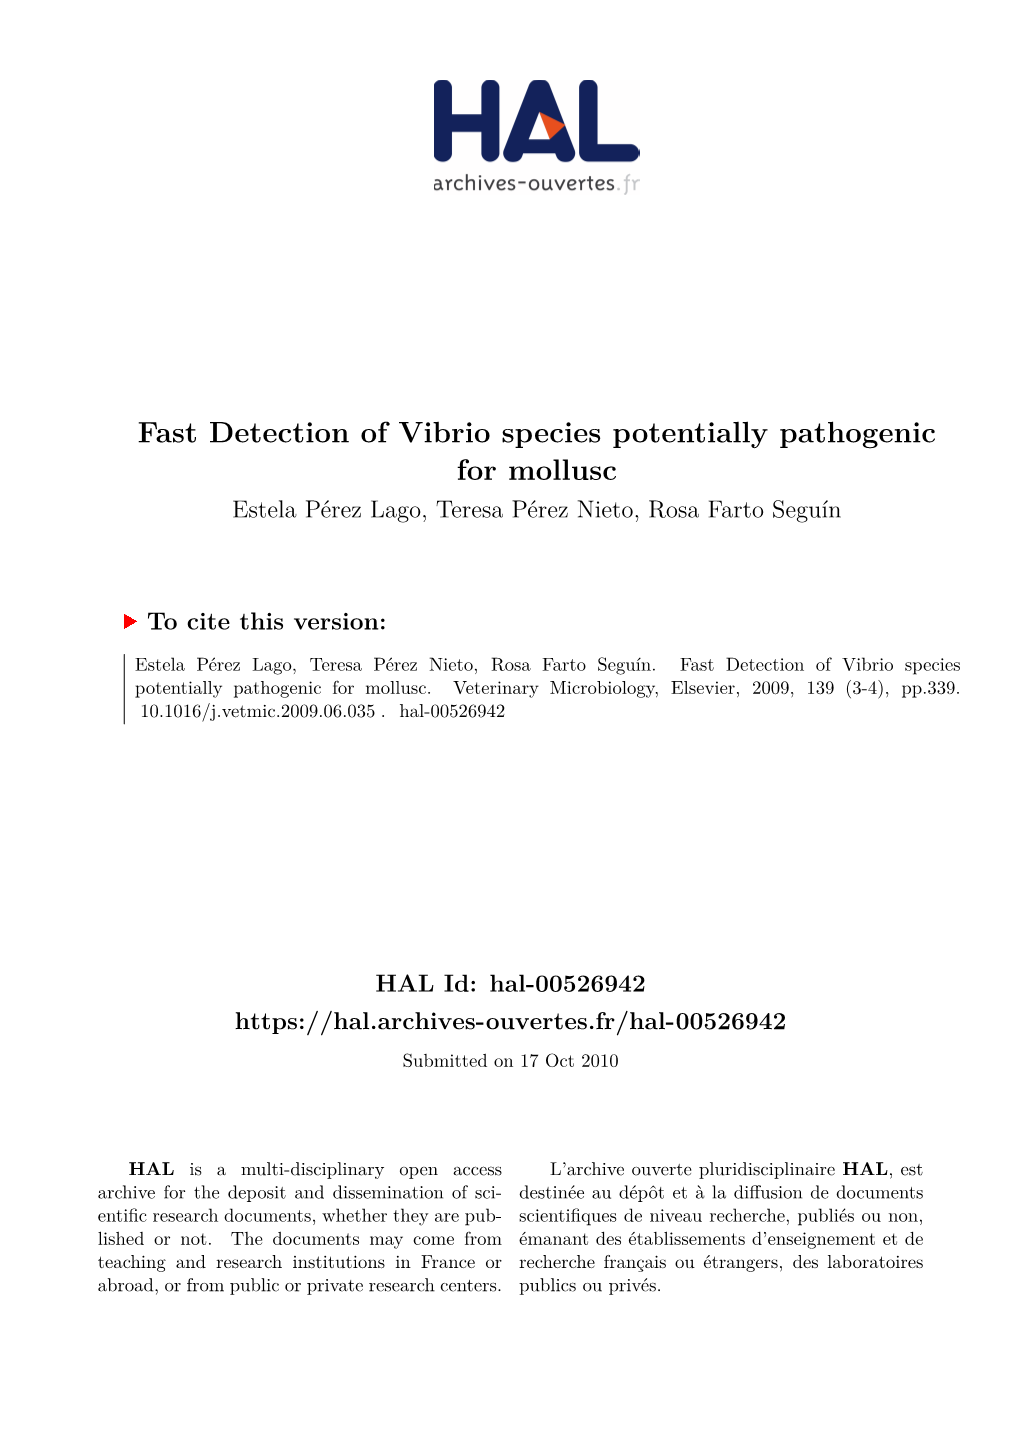 Fast Detection of Vibrio Species Potentially Pathogenic for Mollusc Estela Pérez Lago, Teresa Pérez Nieto, Rosa Farto Seguín